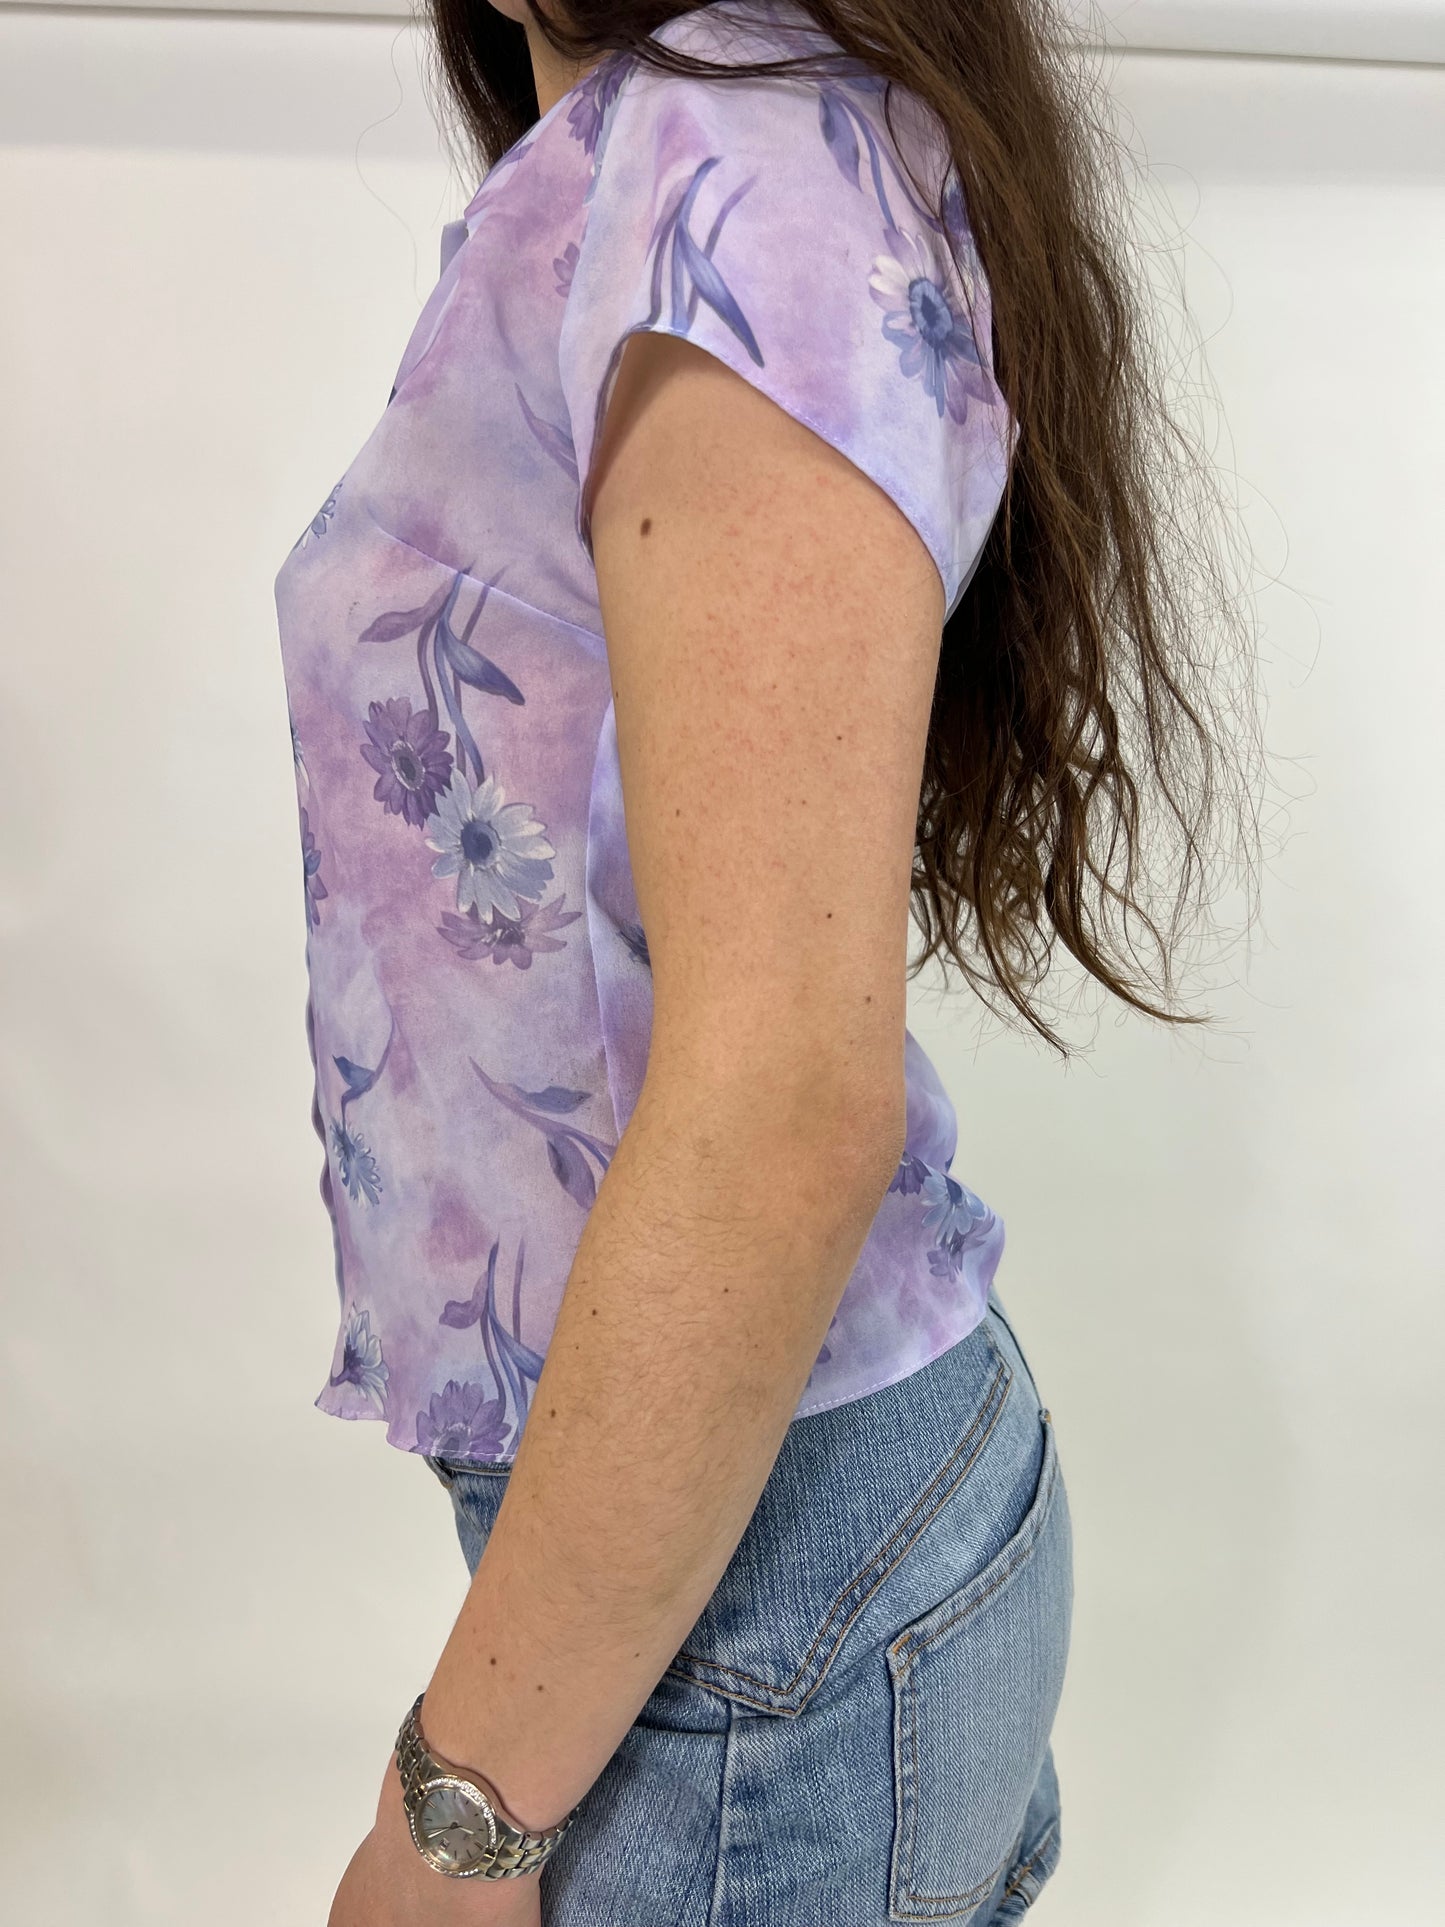 Lilac Floral Chiffon Shirt